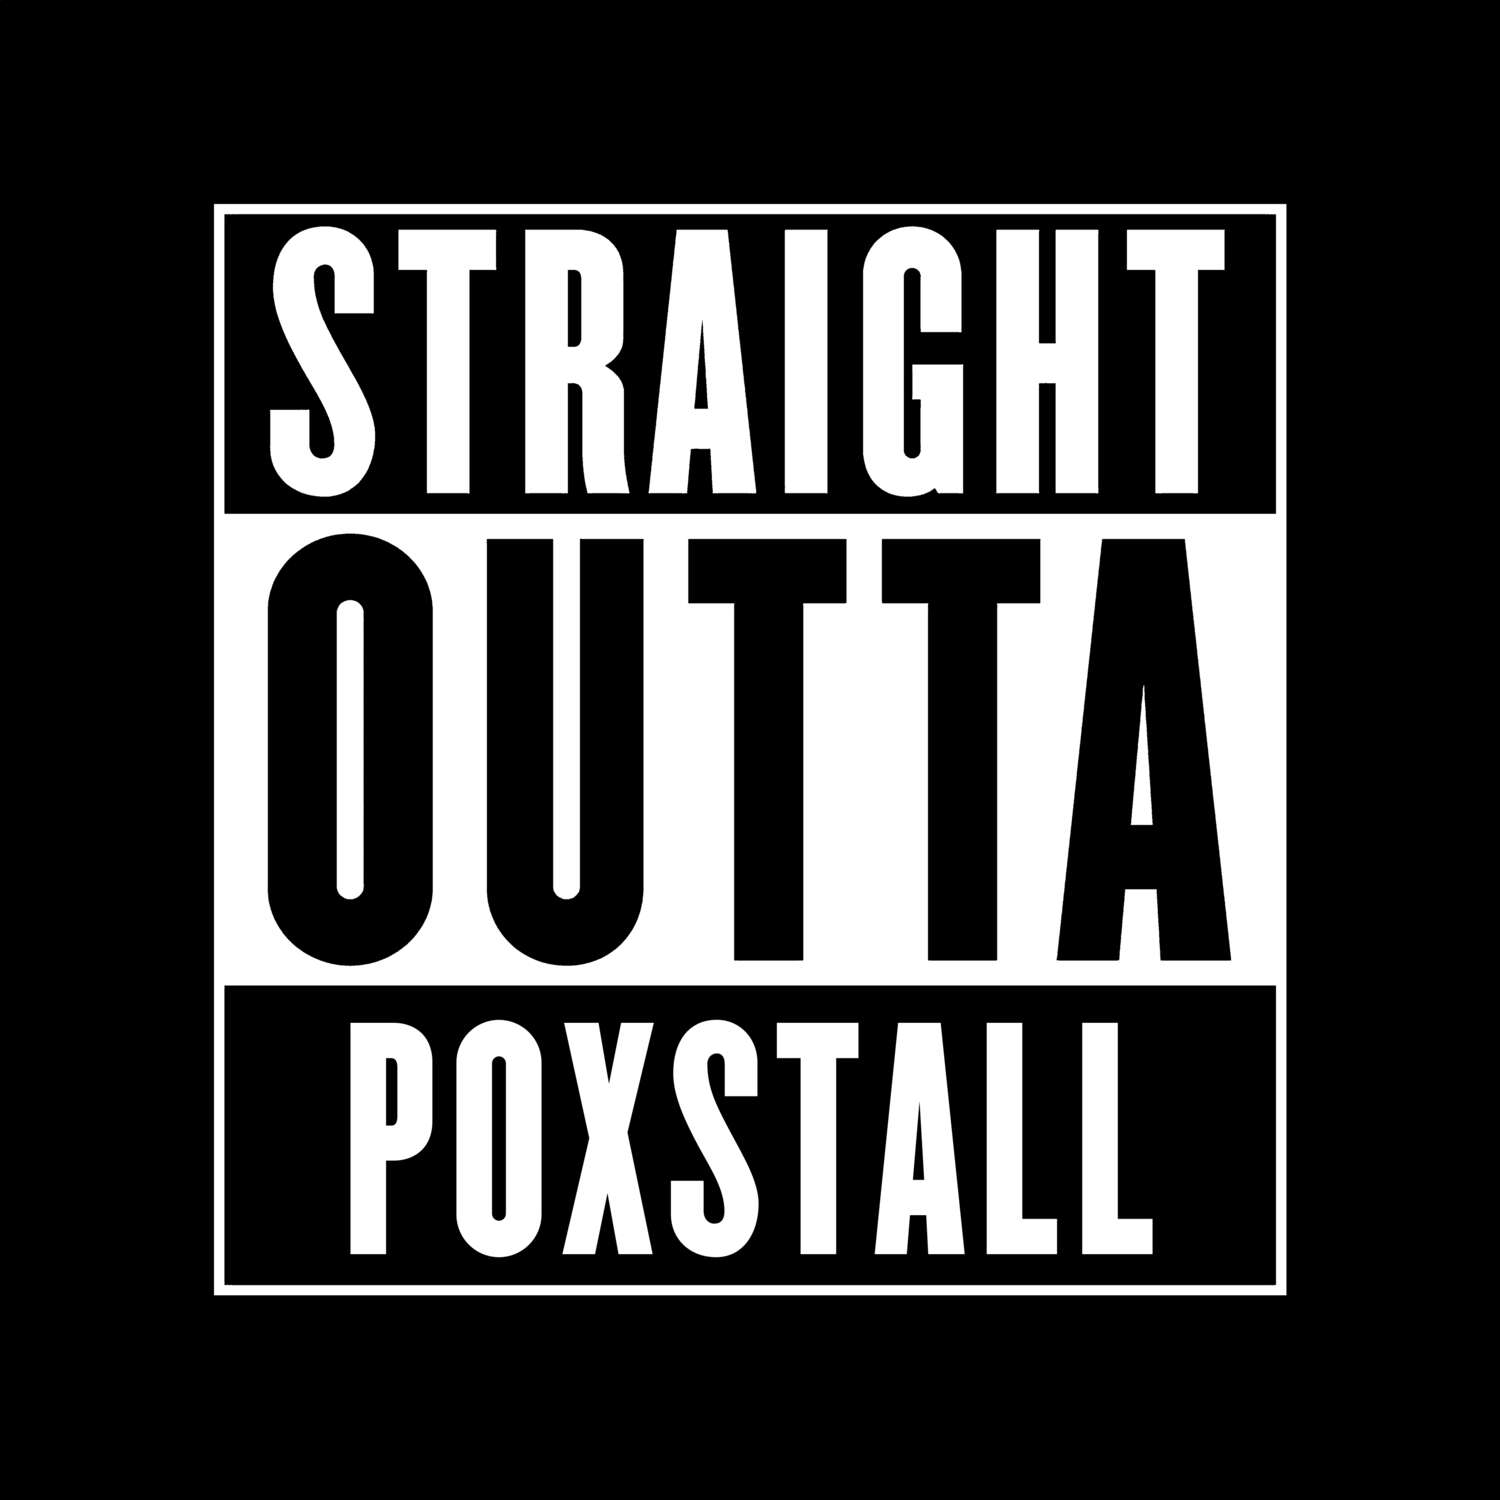 Poxstall T-Shirt »Straight Outta«